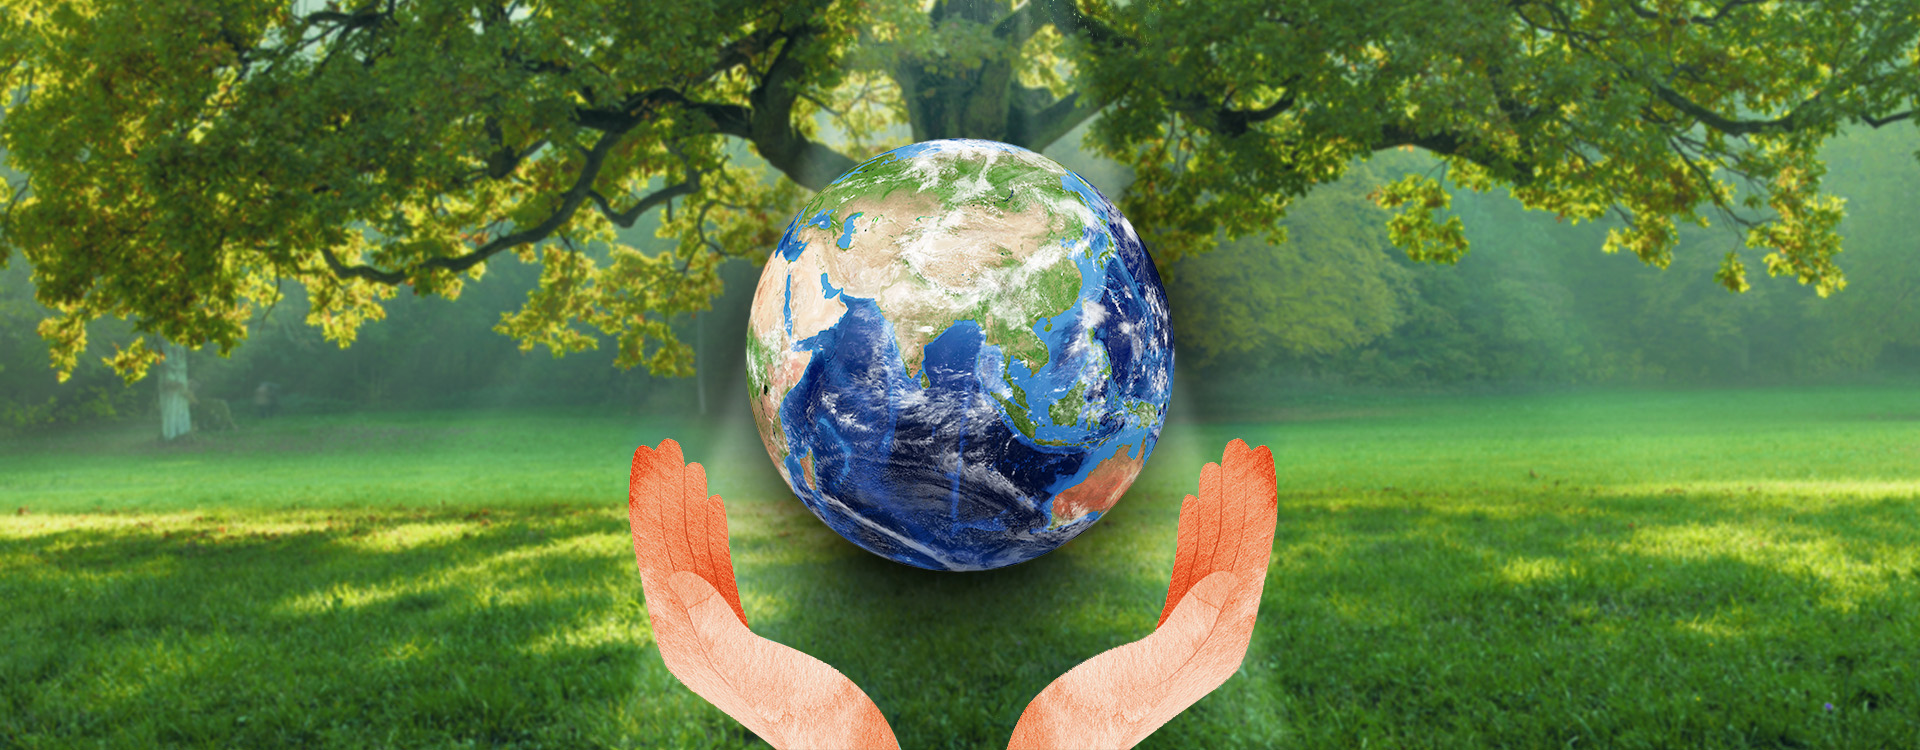 Devic Earth- Clean Earth, Green Earth